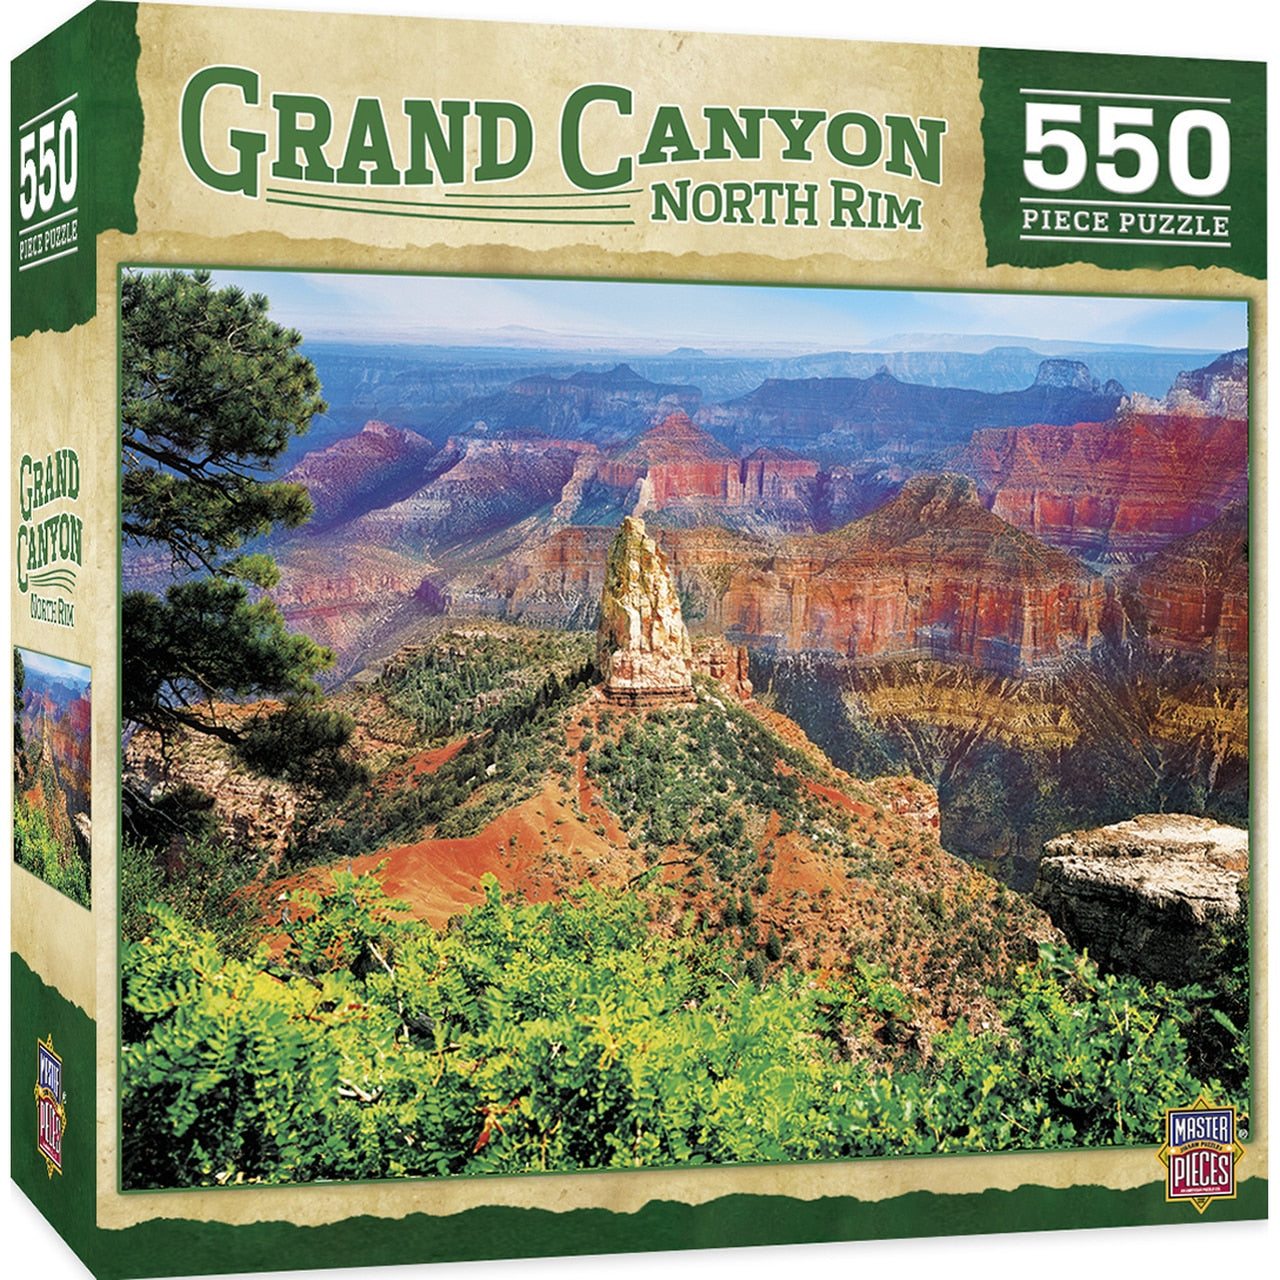 The Grand Canyon North Rim 550 Piece Puzzle    